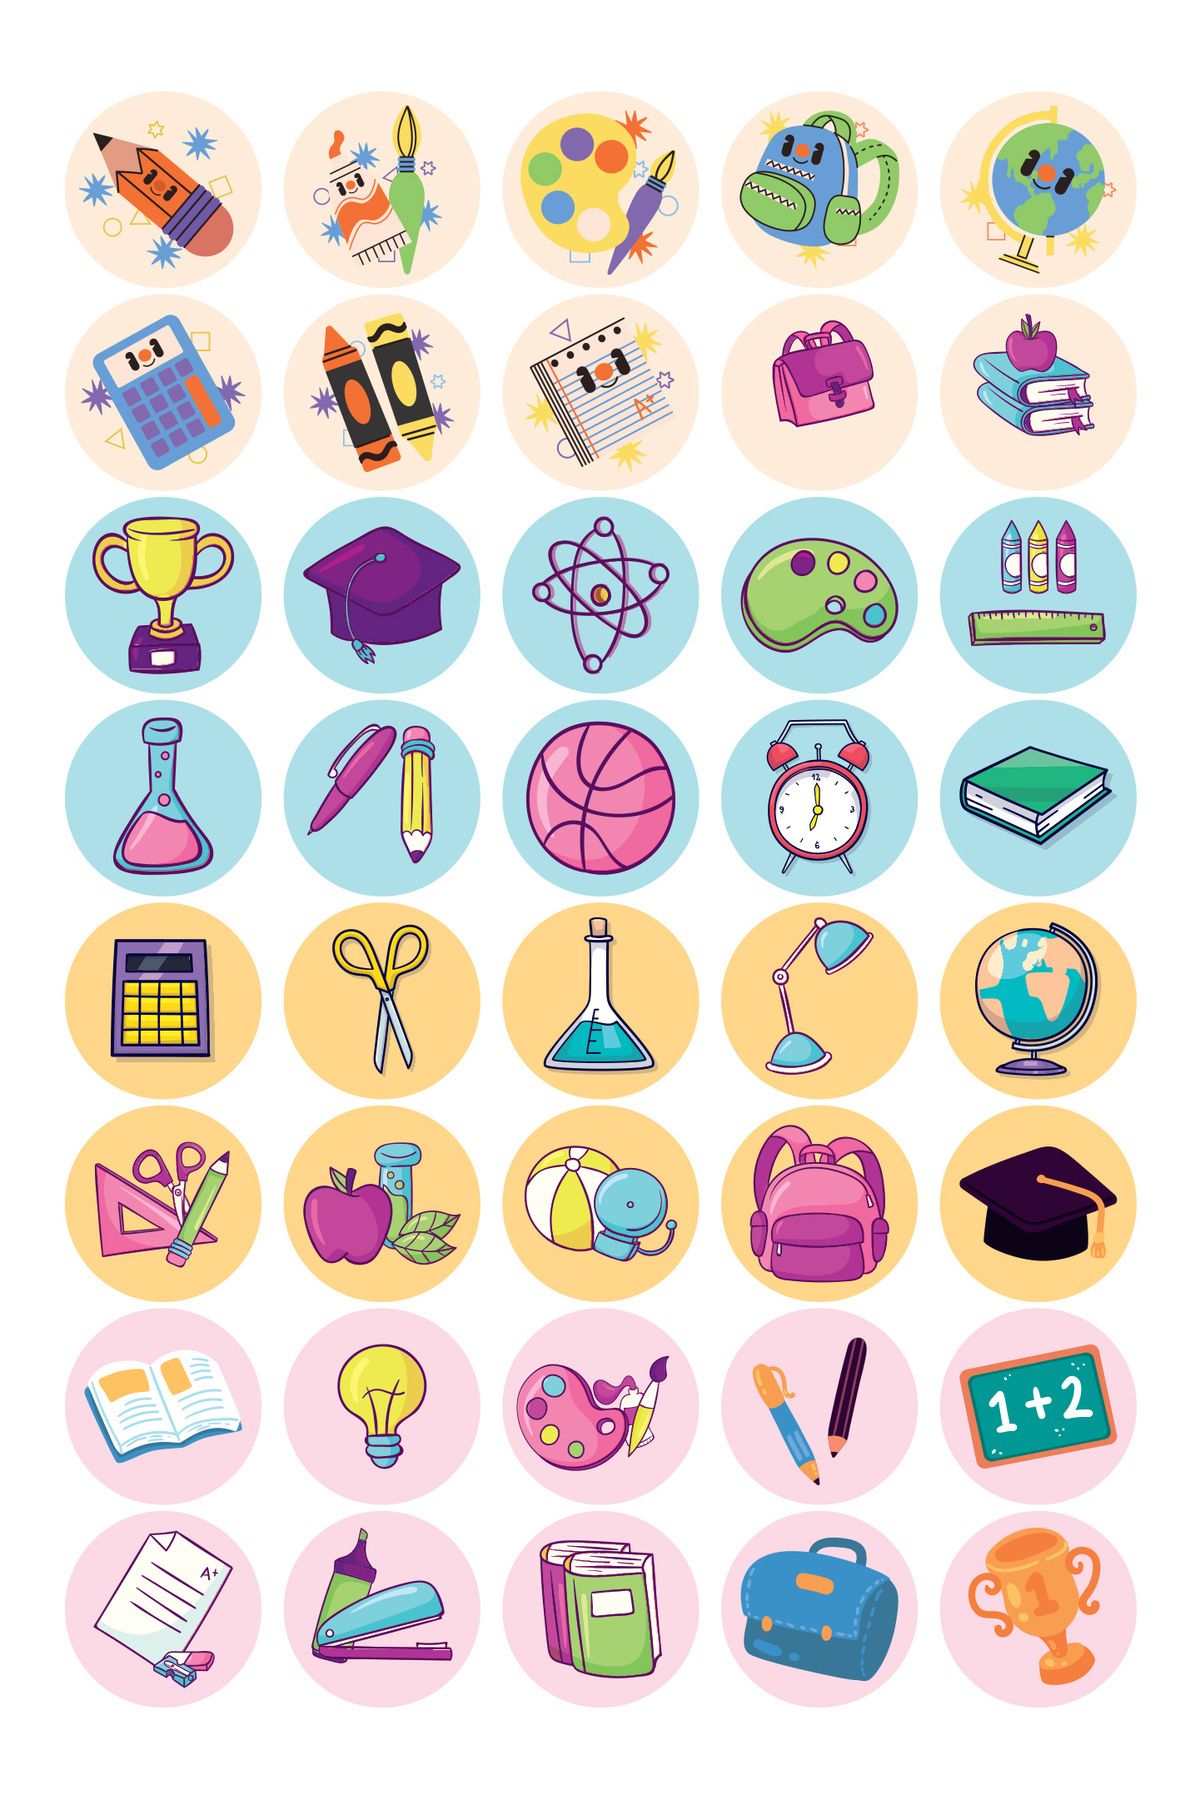 arsem 40 Adet Okul Ders Araç Gereçleri Temalı Sticker Etiket Seti - Ajanda, Telefon, Tablet, Defter,Laptop